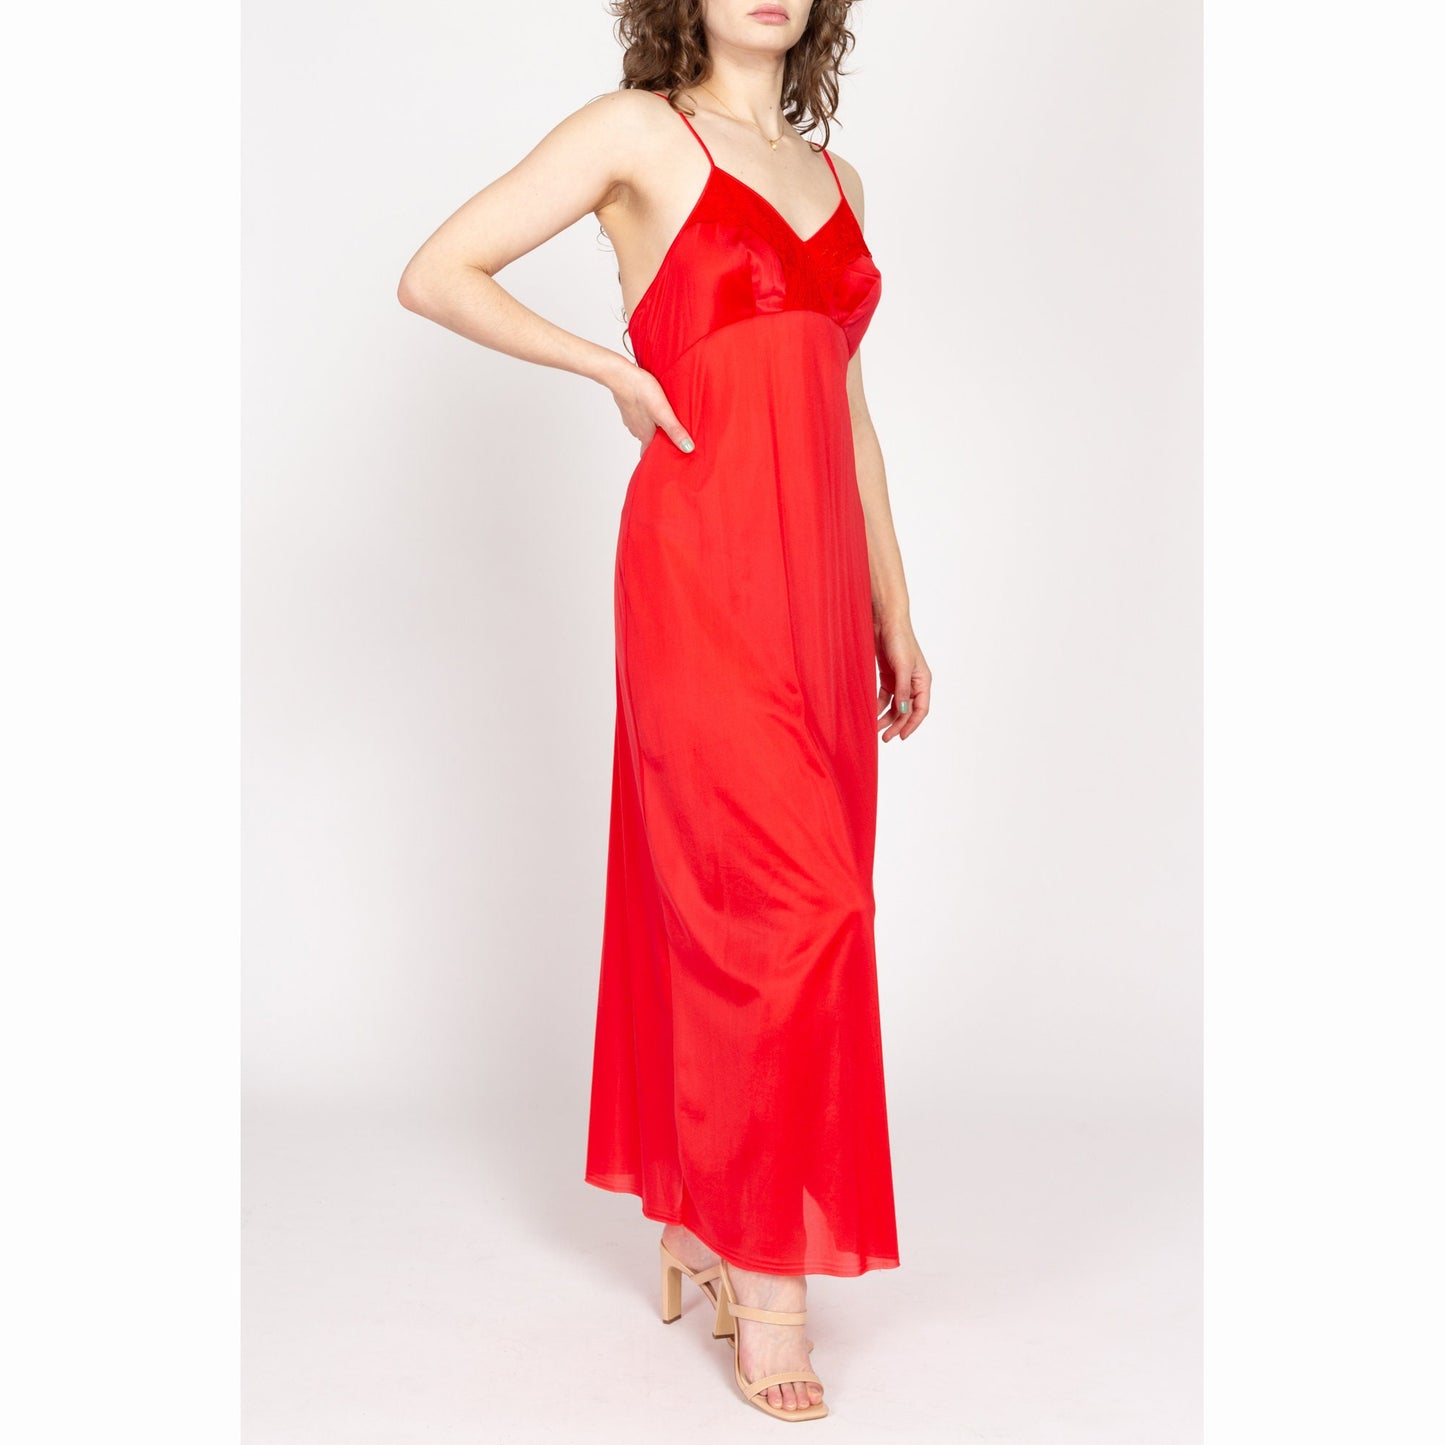 Medium 80s Red Maxi Nightgown | Vintage Lace Trim Negligee Nightie Slip Dress